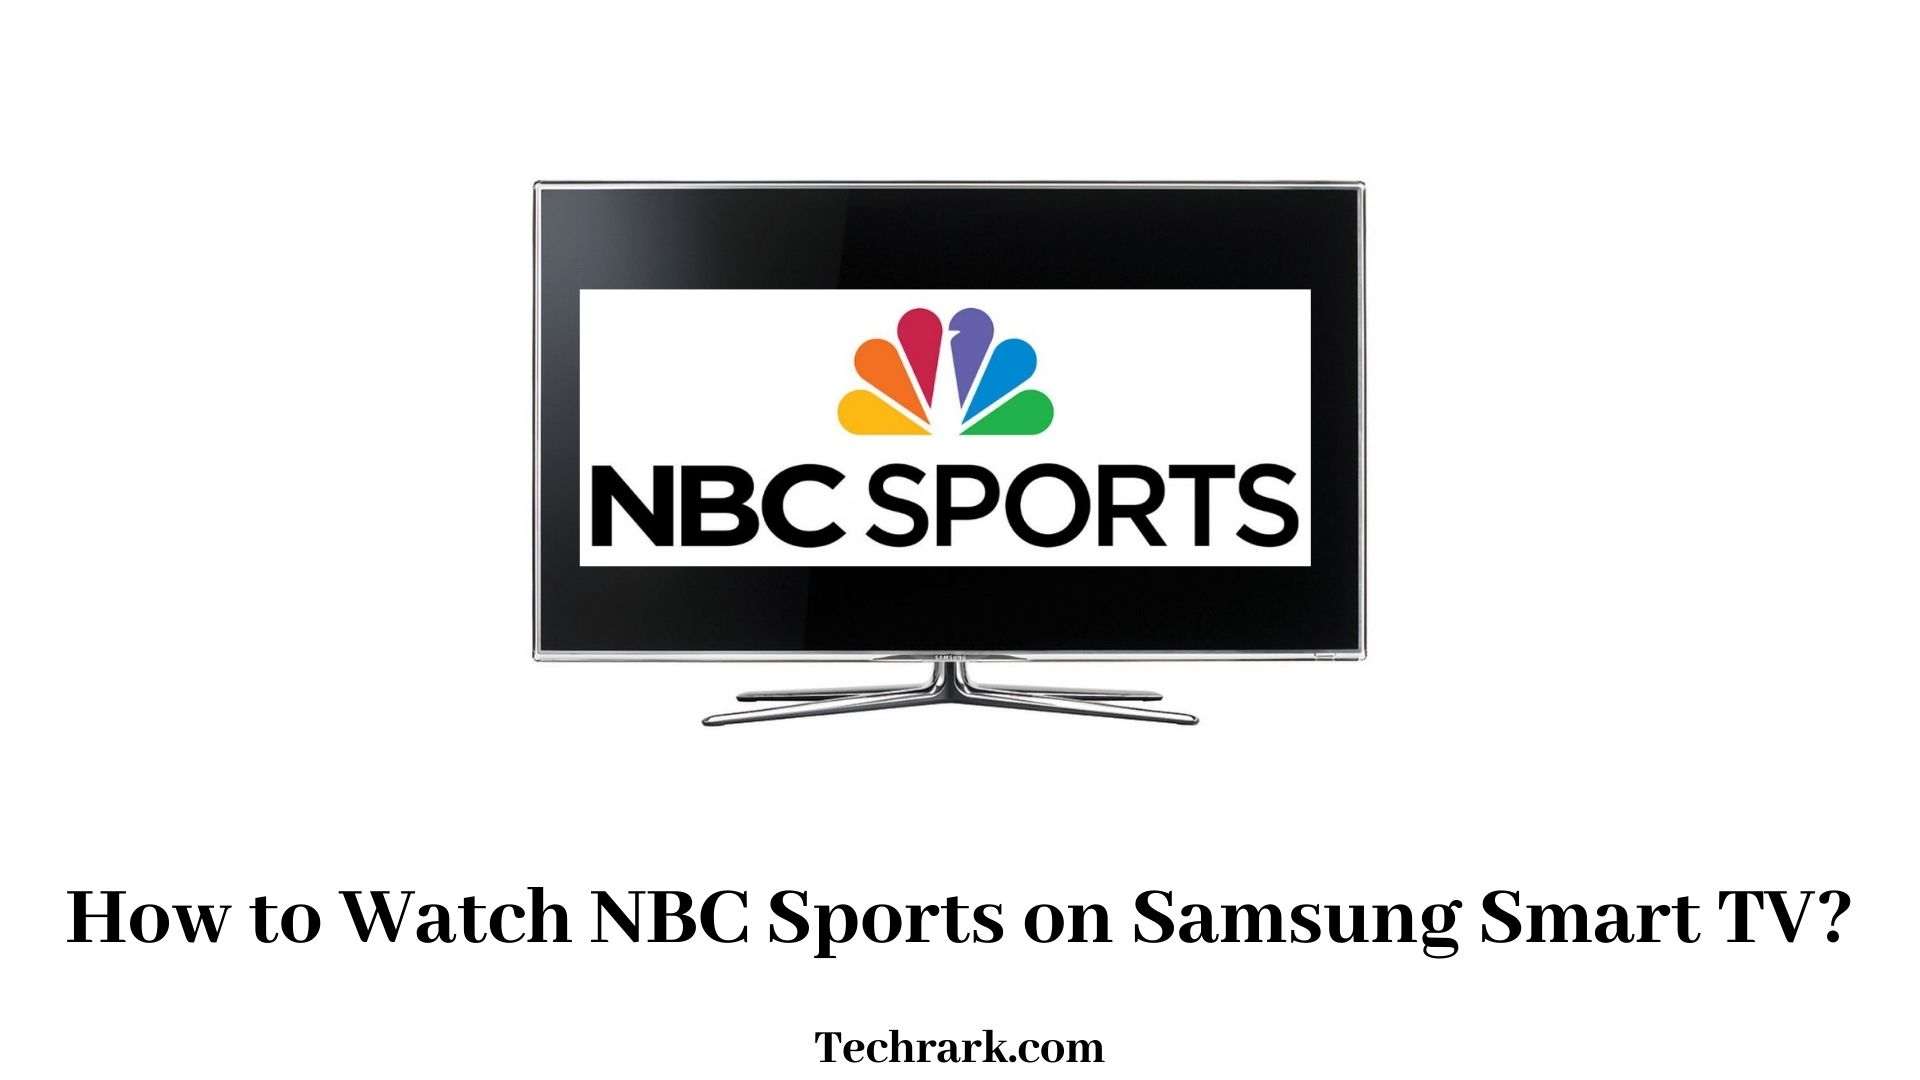 NBC Sports on Samsung Smart TV